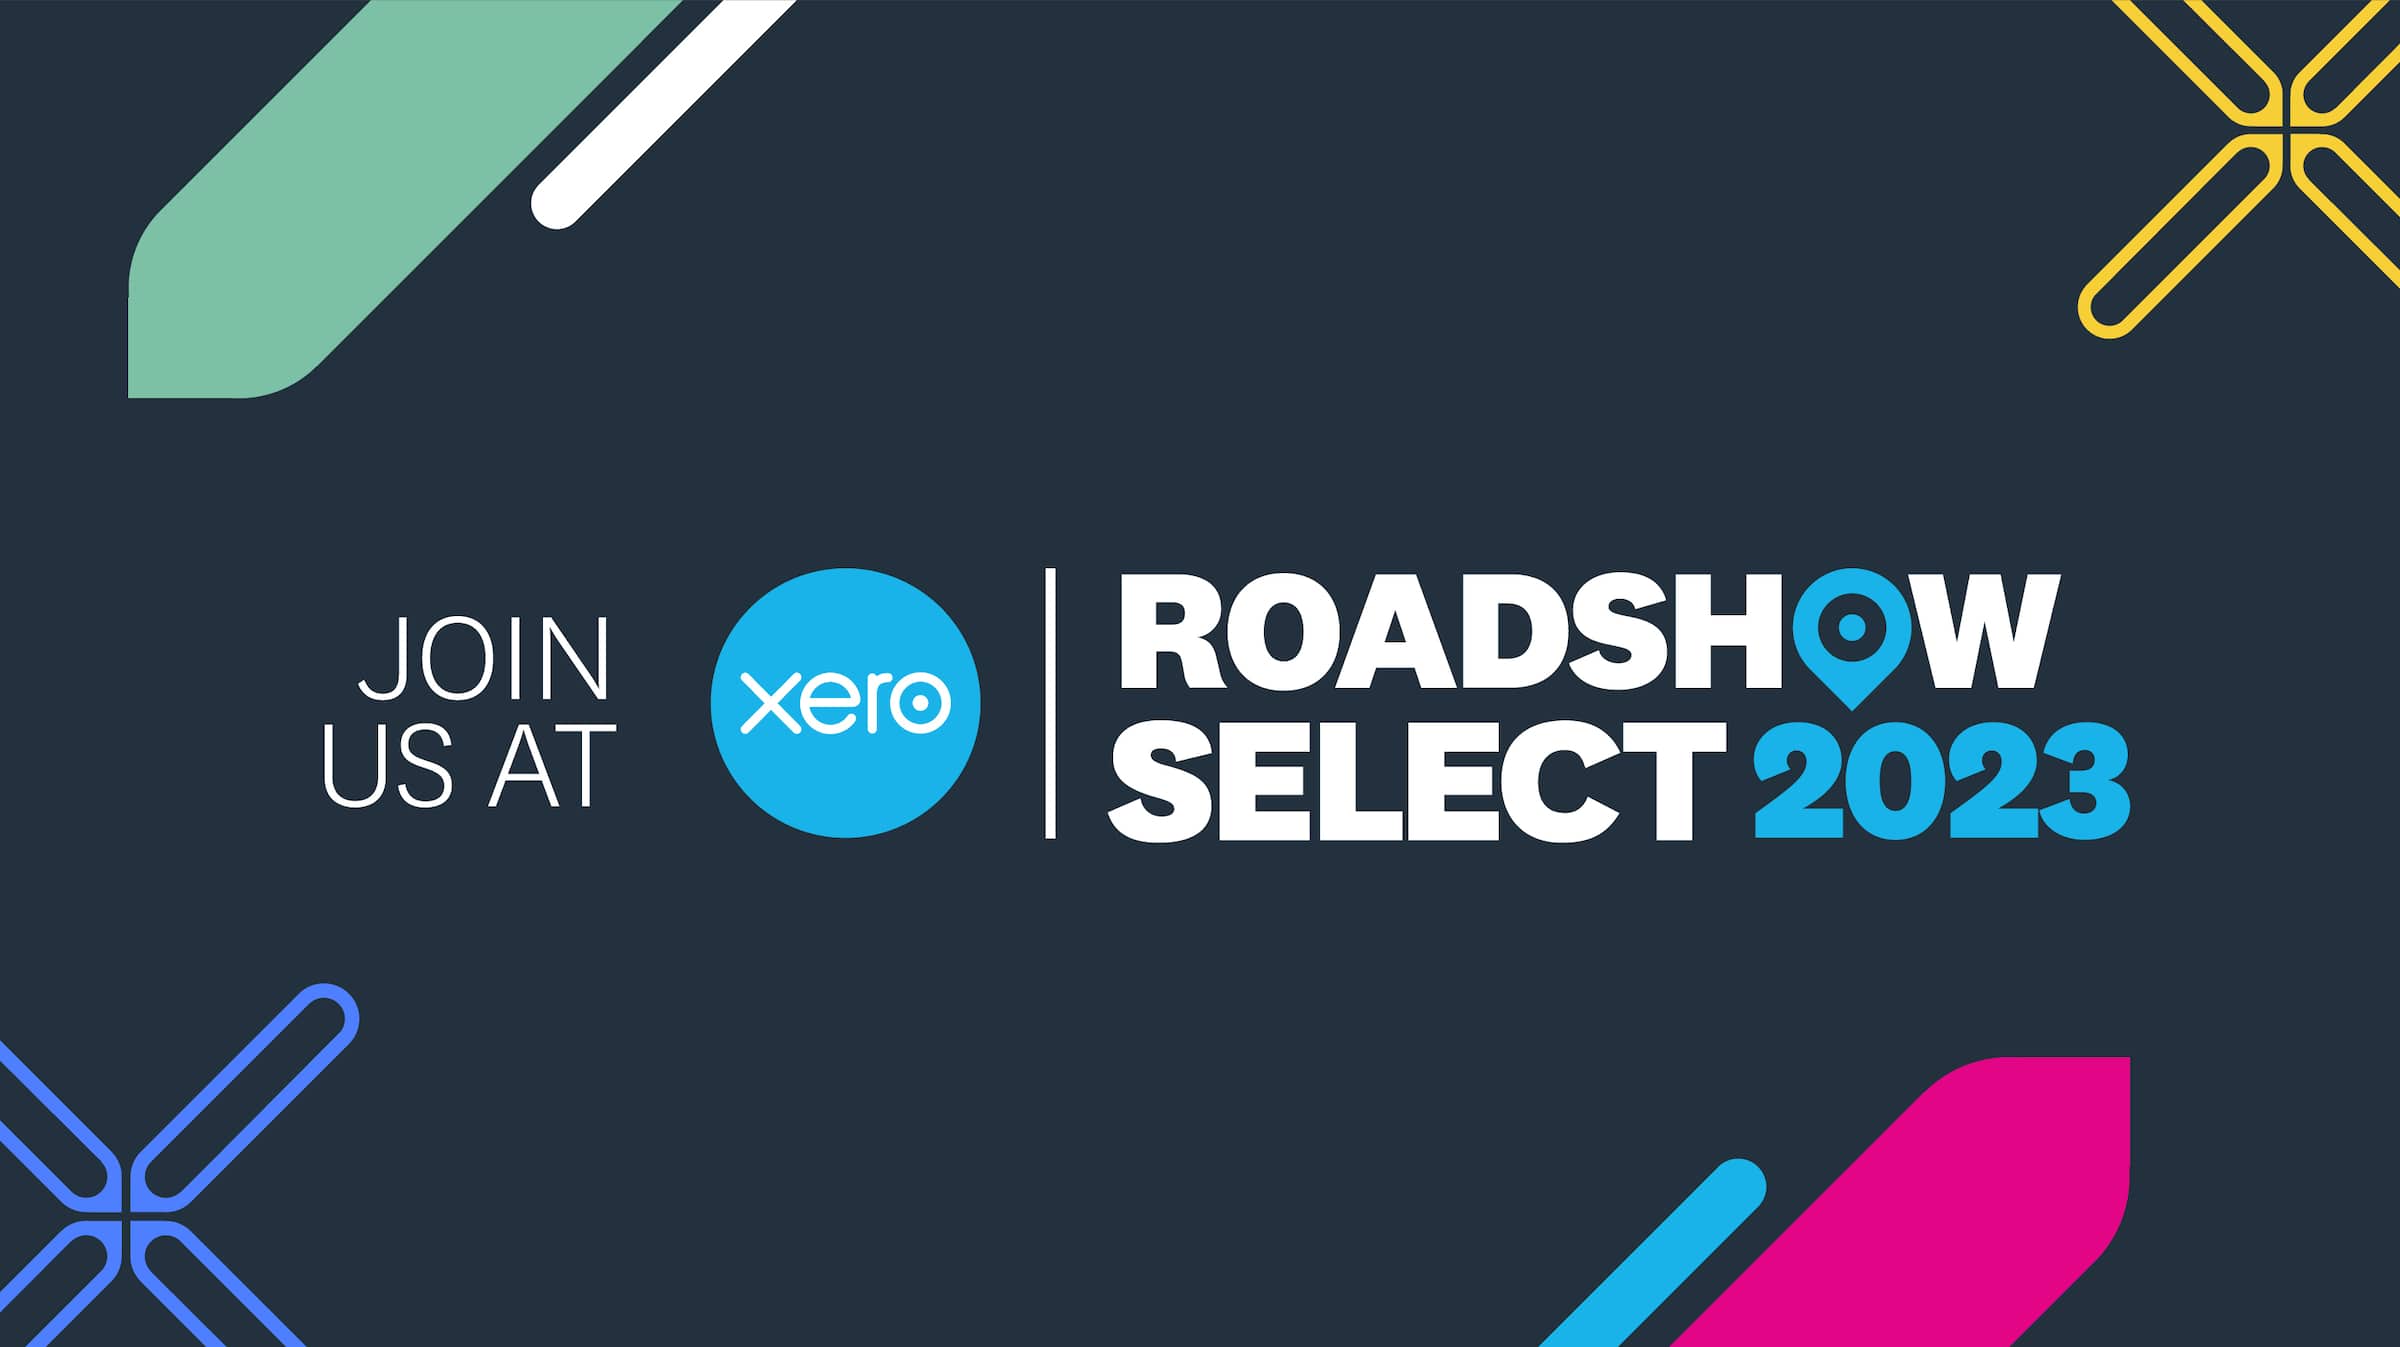 Roadshow Select 2023